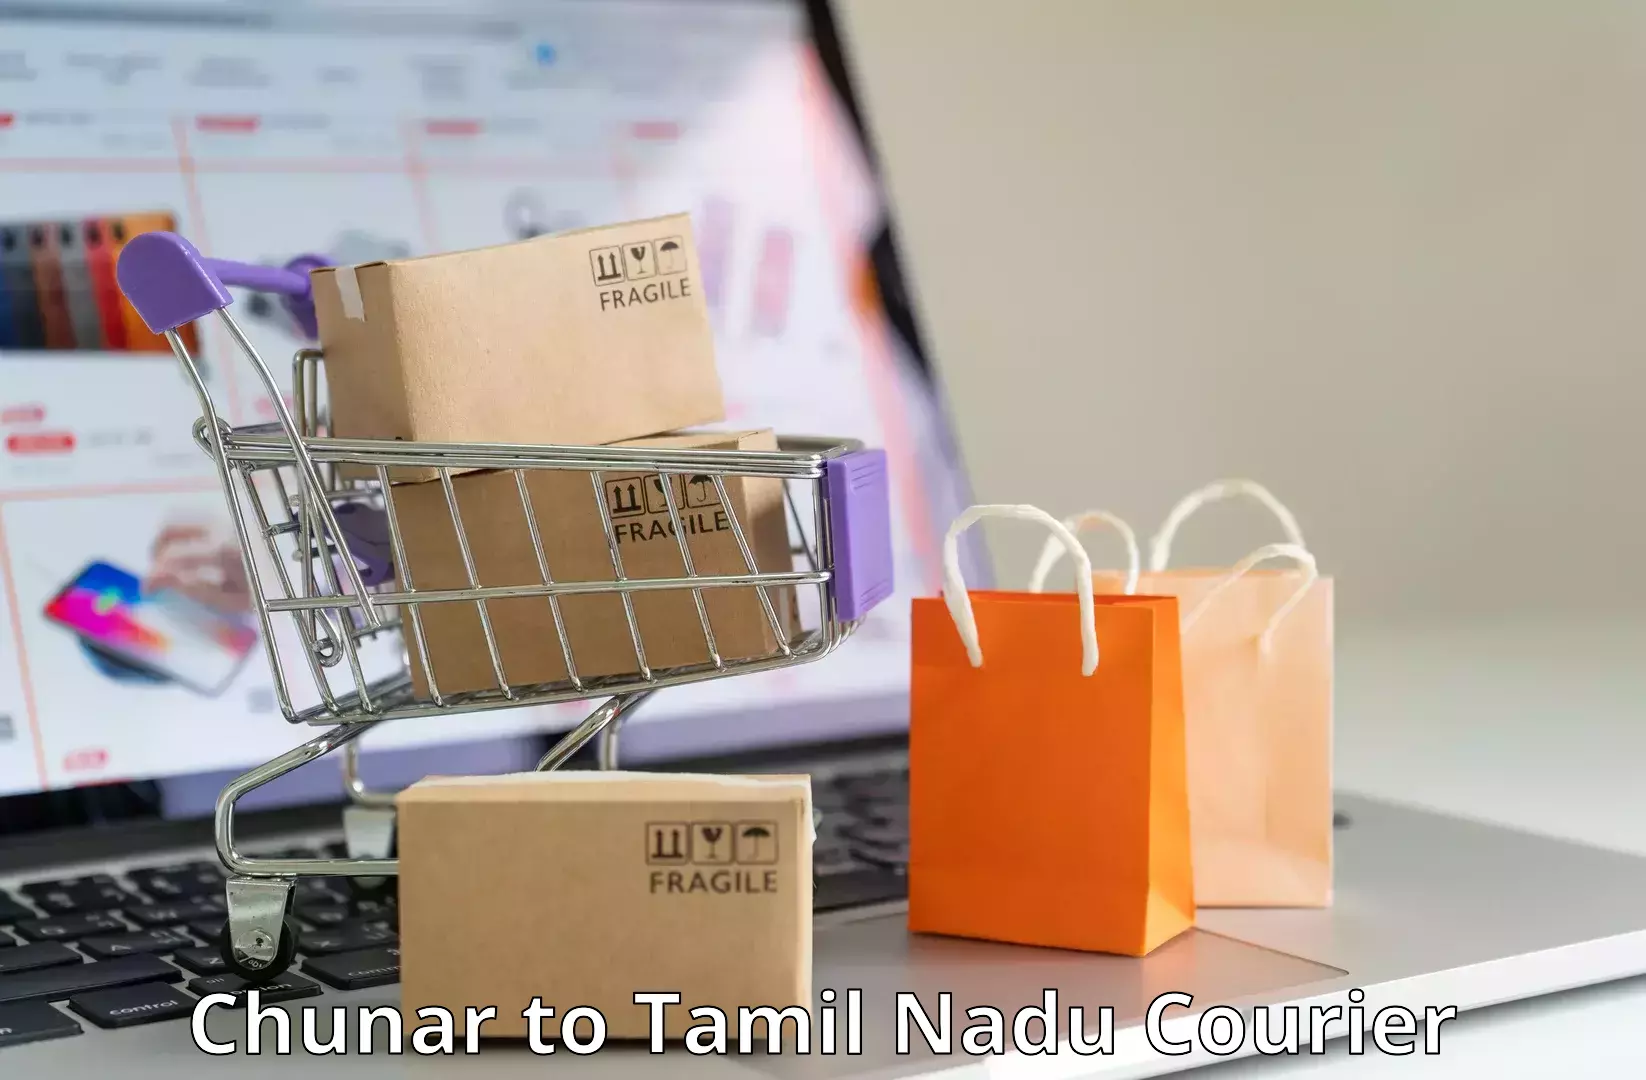 Efficient cargo handling Chunar to Tamil Nadu